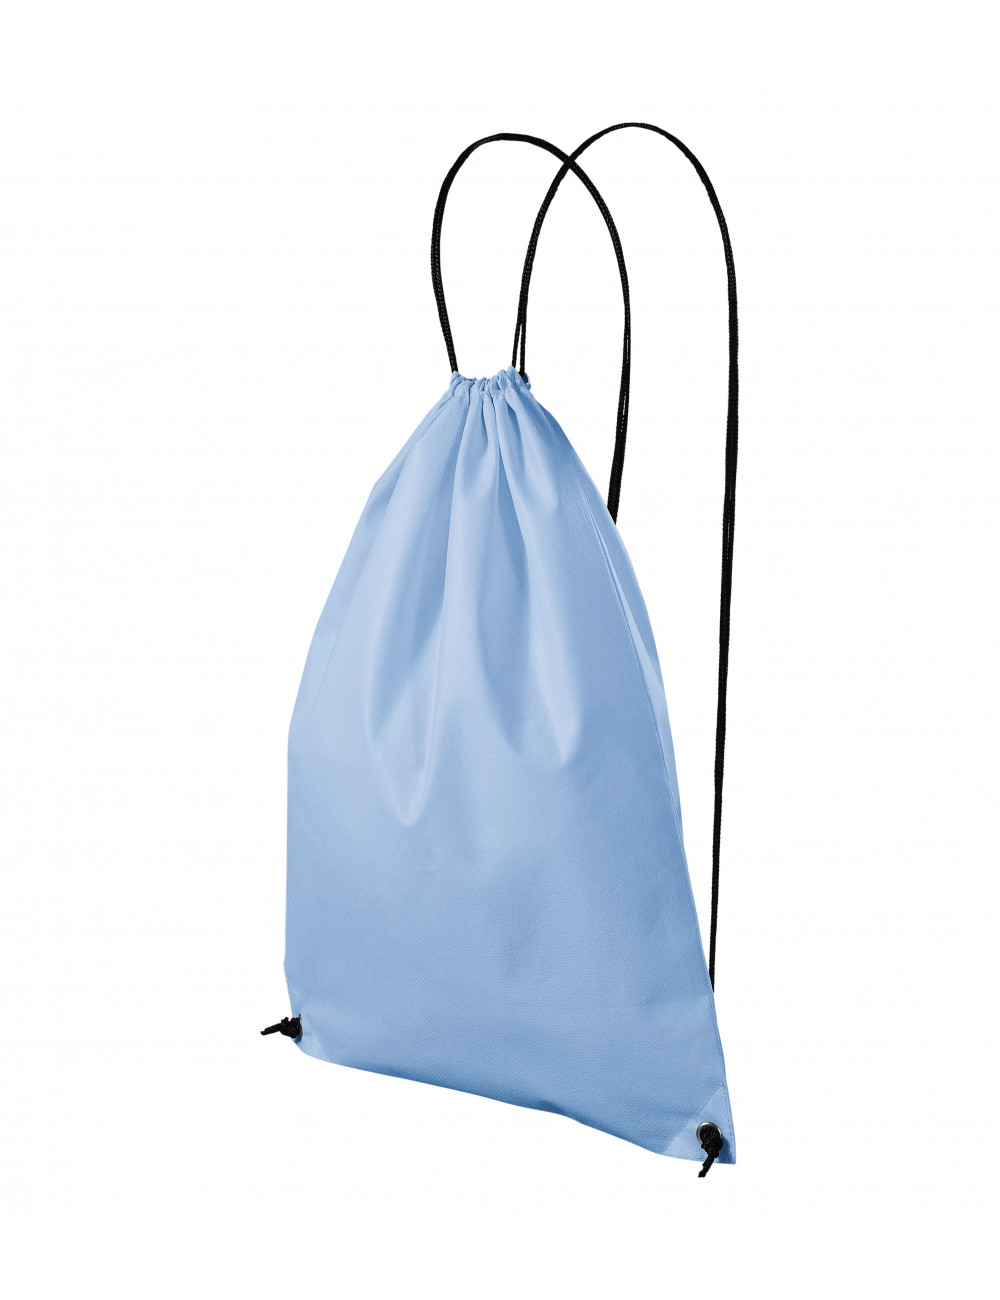 Beetle p92 unisex backpack blue Adler Piccolio